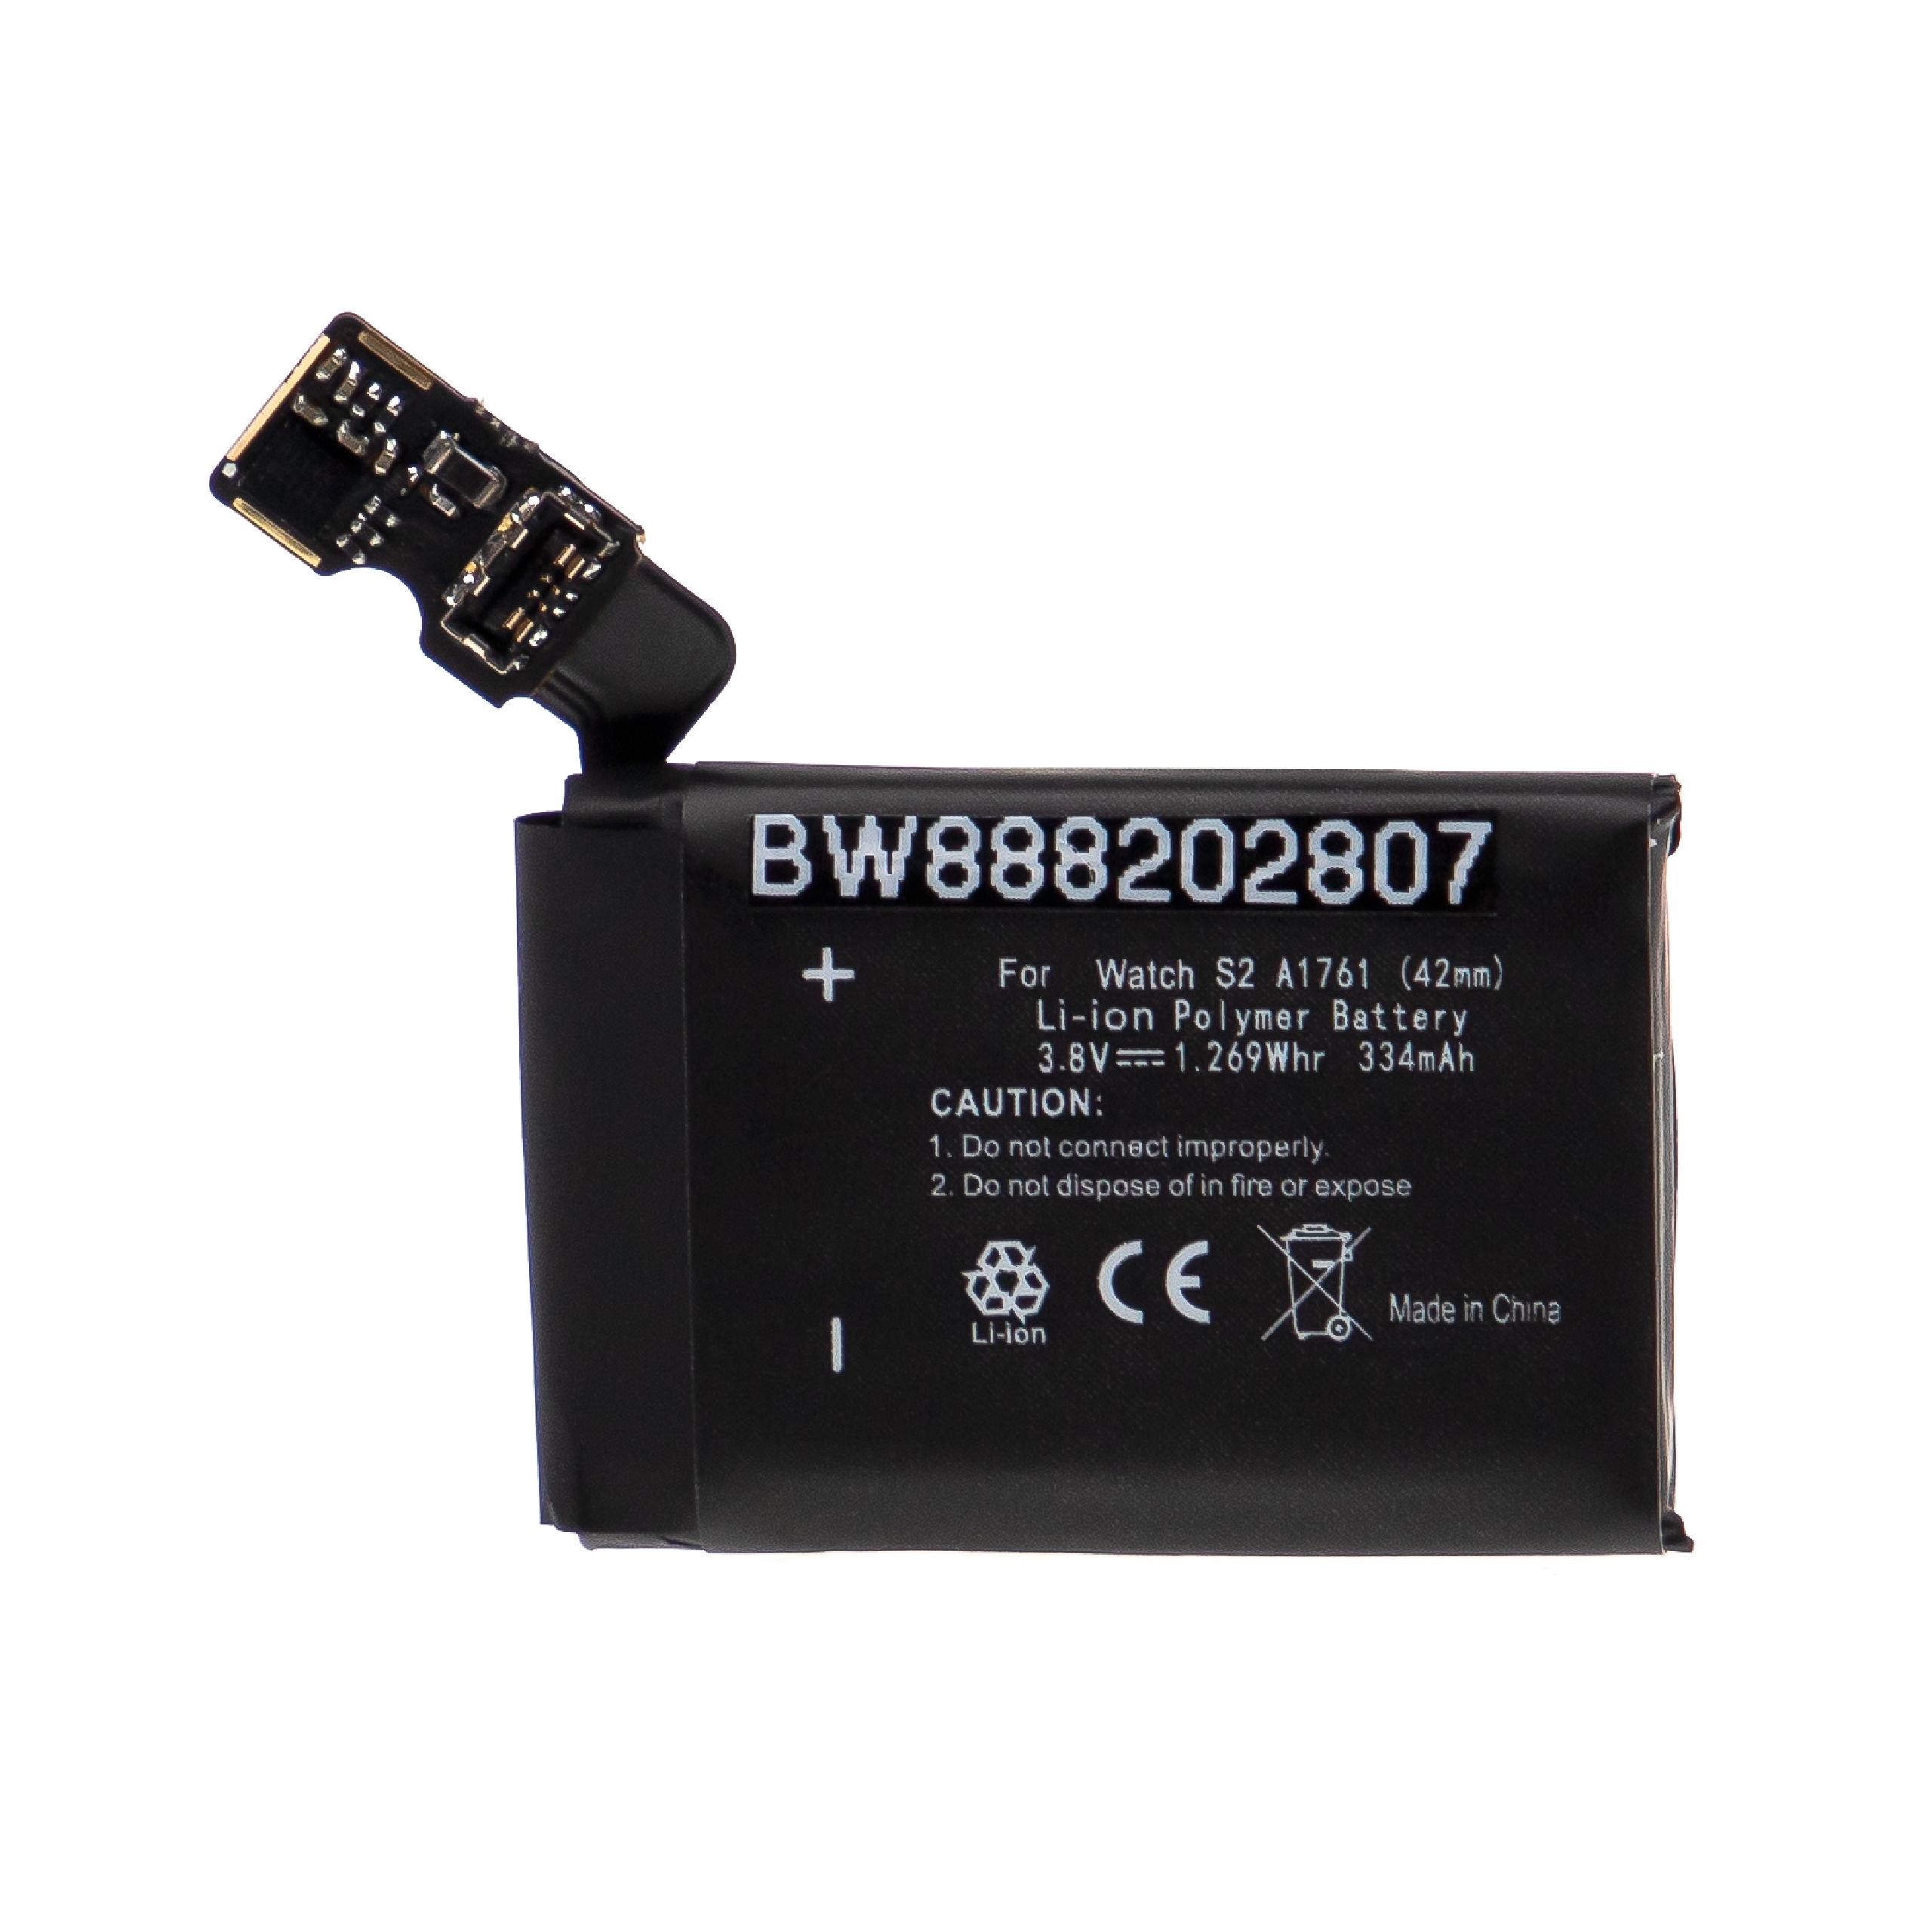 Akumulator do smartwatch / opaski fitness zamiennik Apple A1761 - 334 mAh 3,8 V LiPo